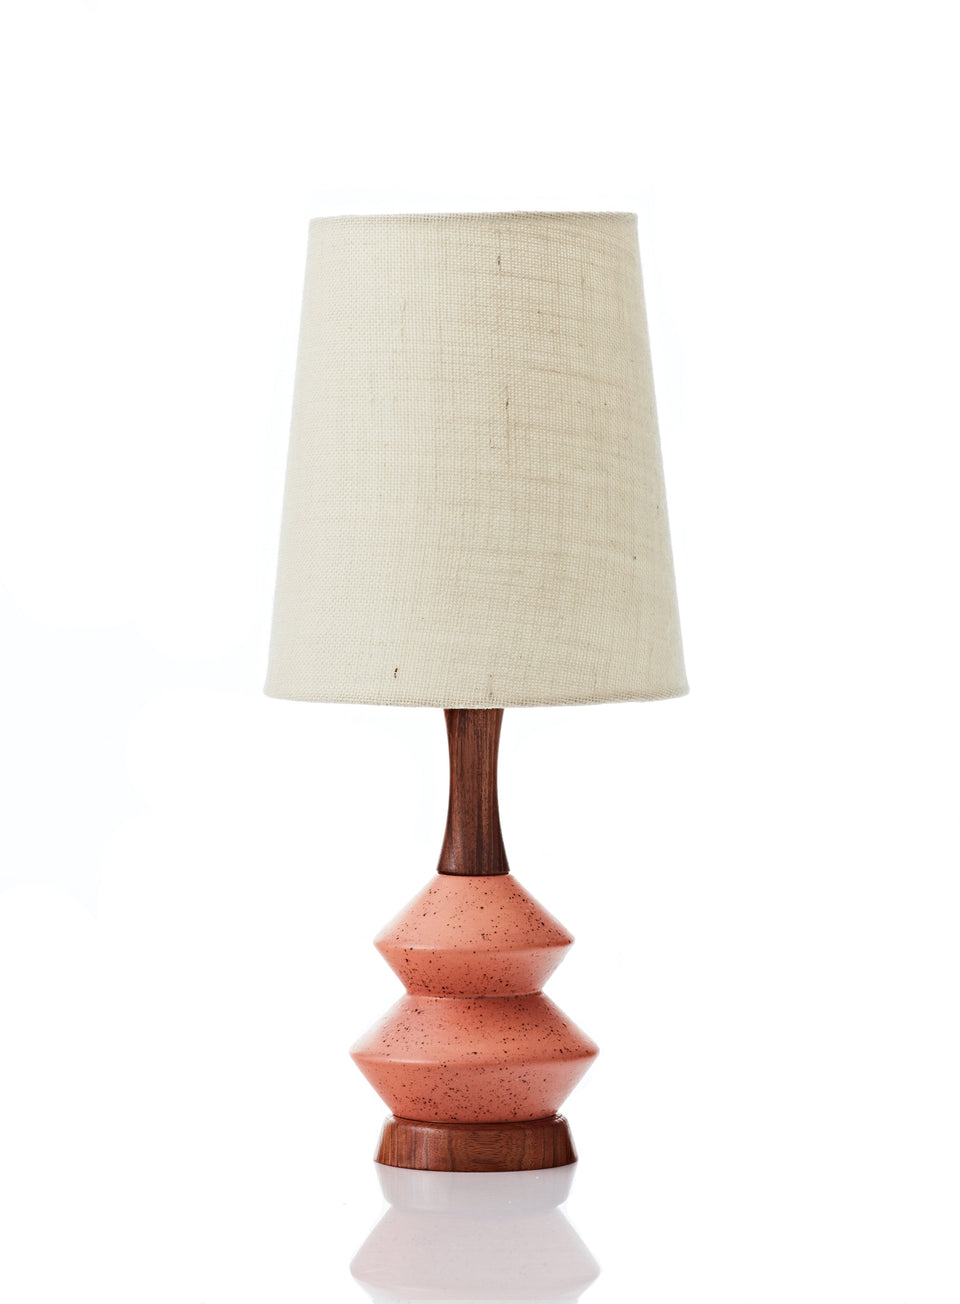 Athena Lamp • Small - Vanilla Hessian - SALE